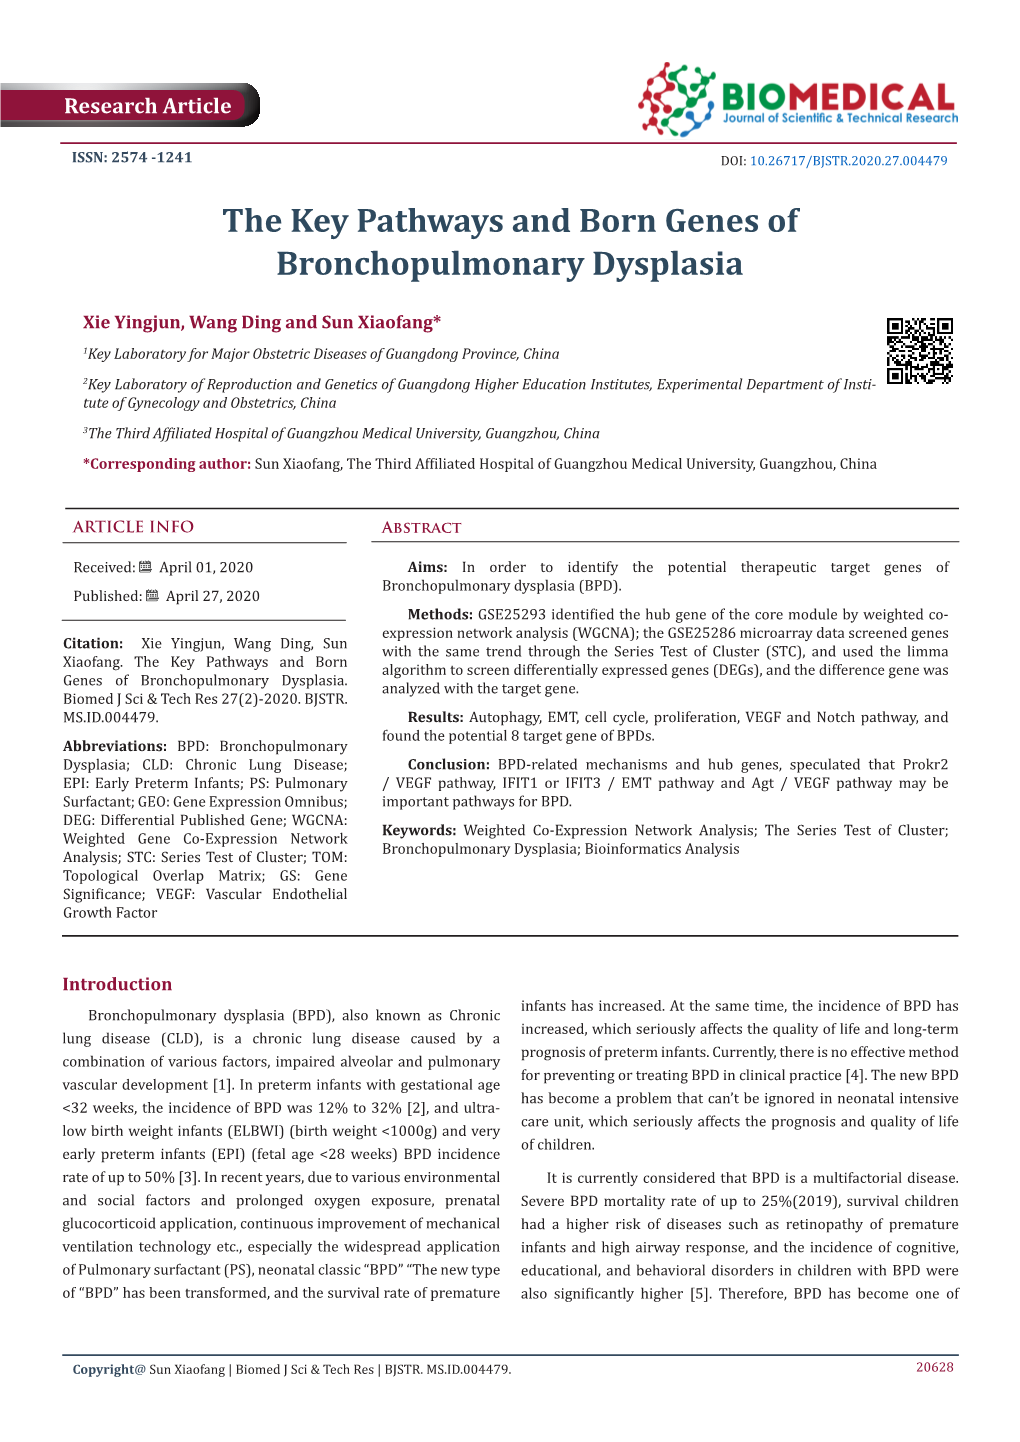 The Key Pathways and Born Genes of Bronchopulmonary Dysplasia